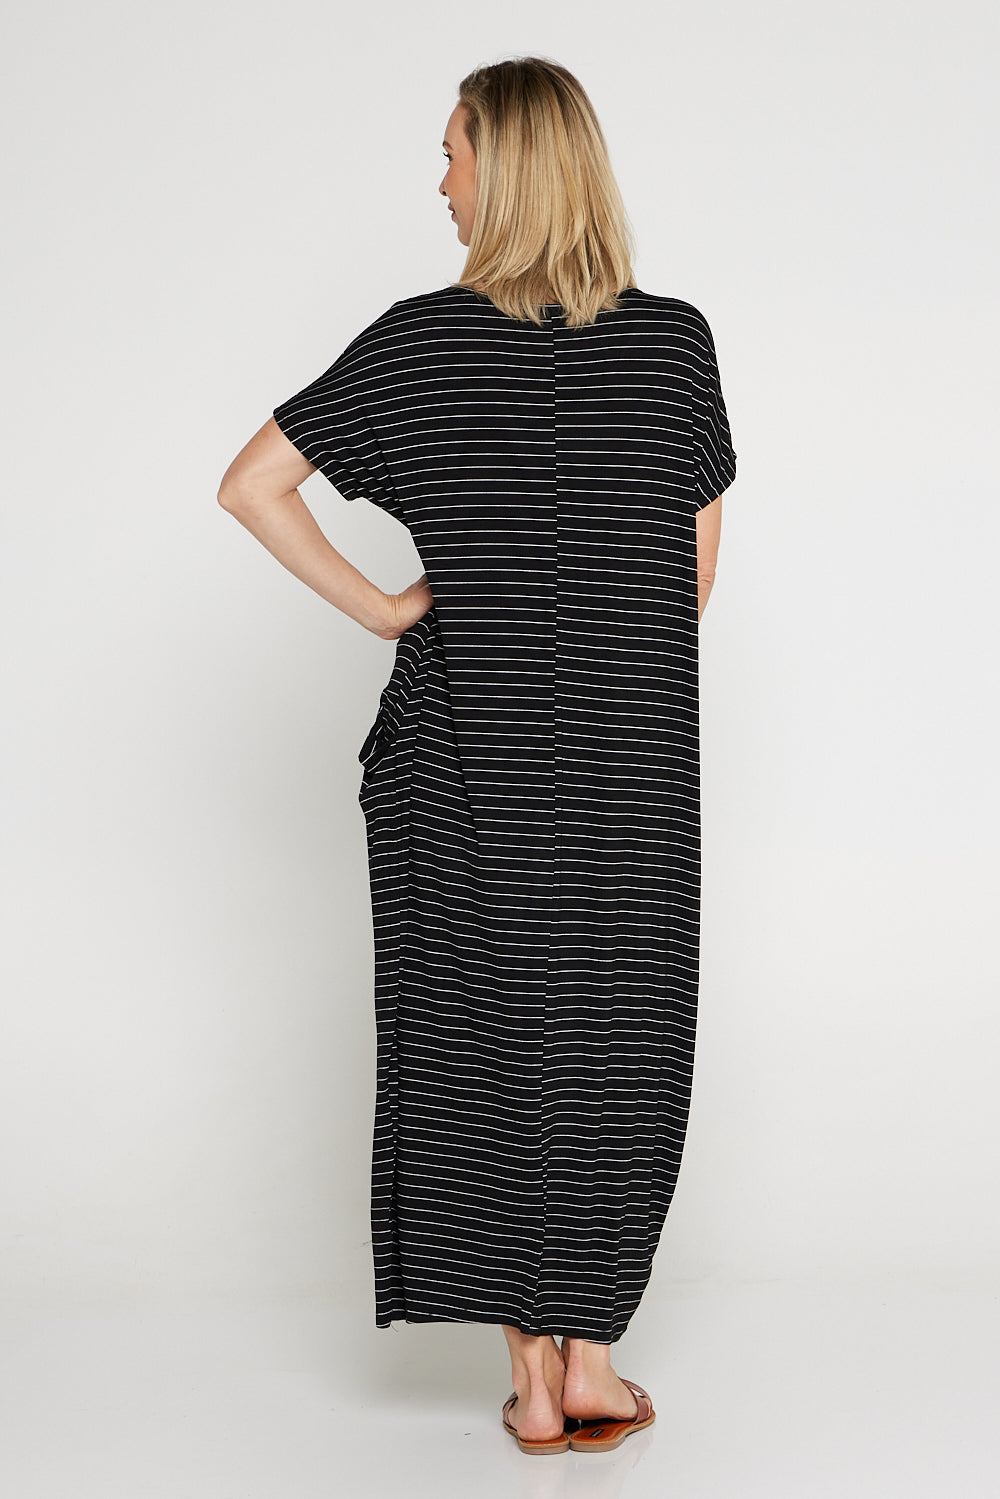 Rowan Dress - Black/White Stripe